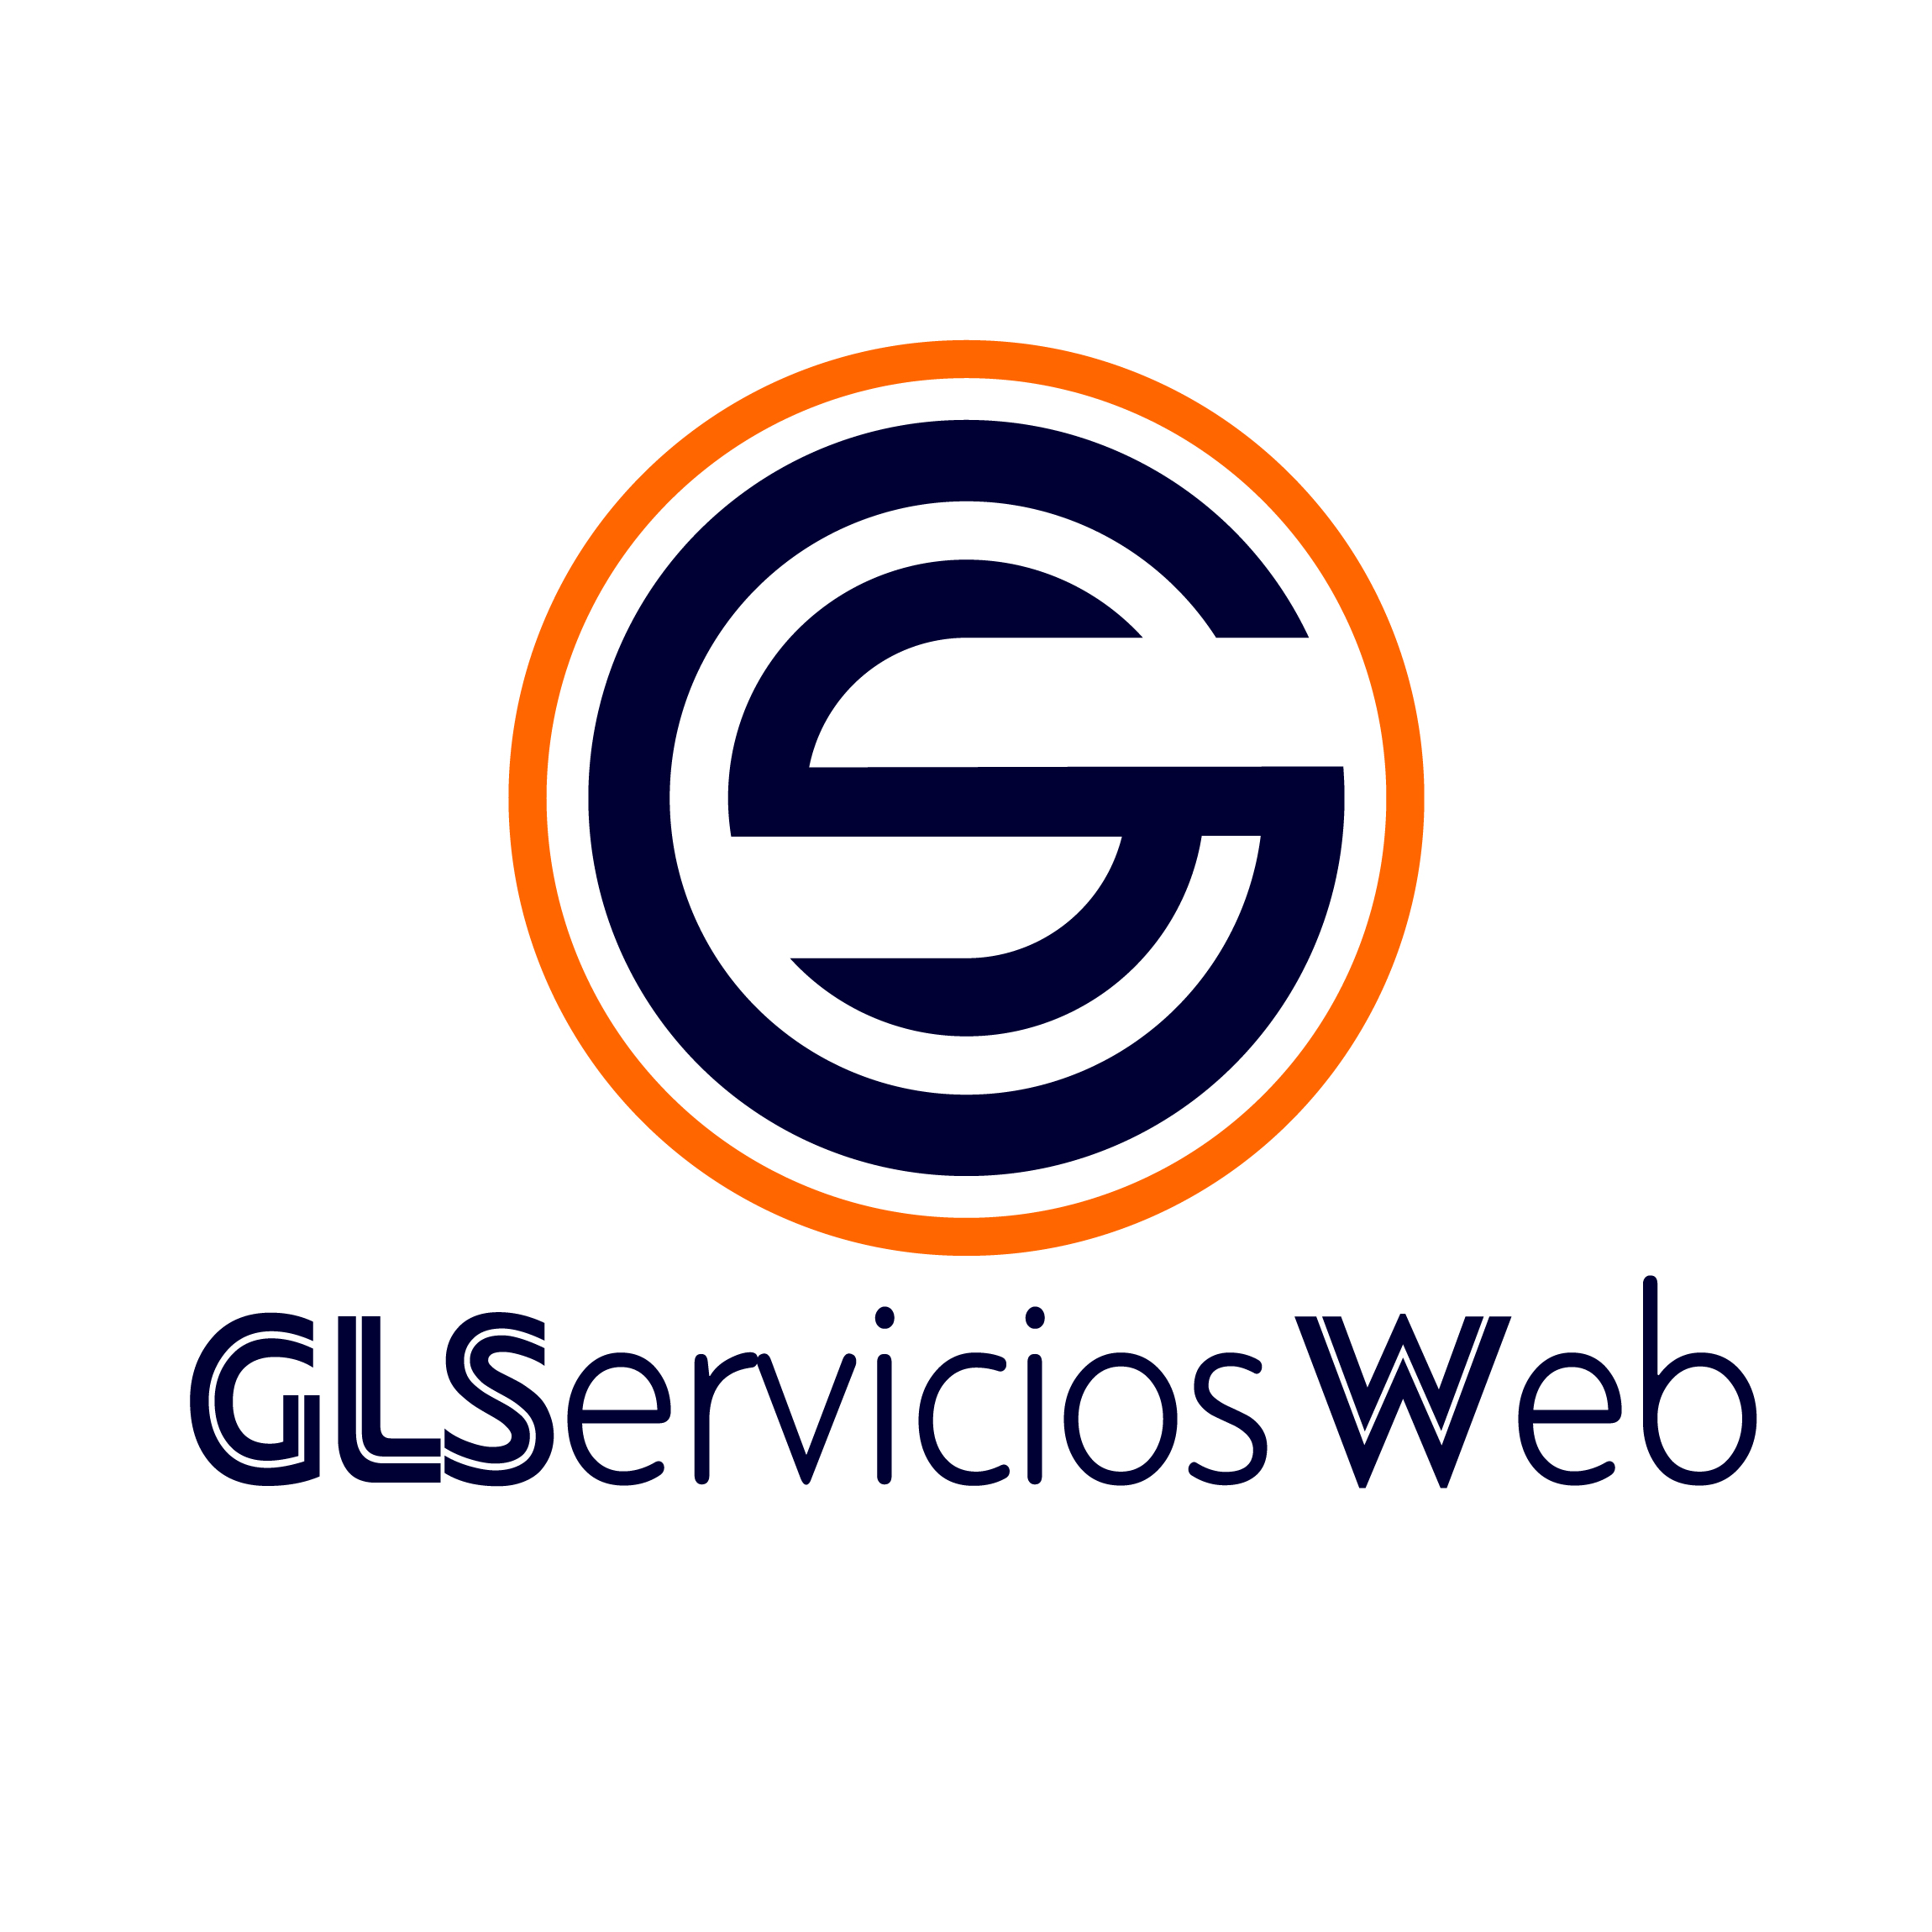 Glserviciosweb – Webdevelopment Agency